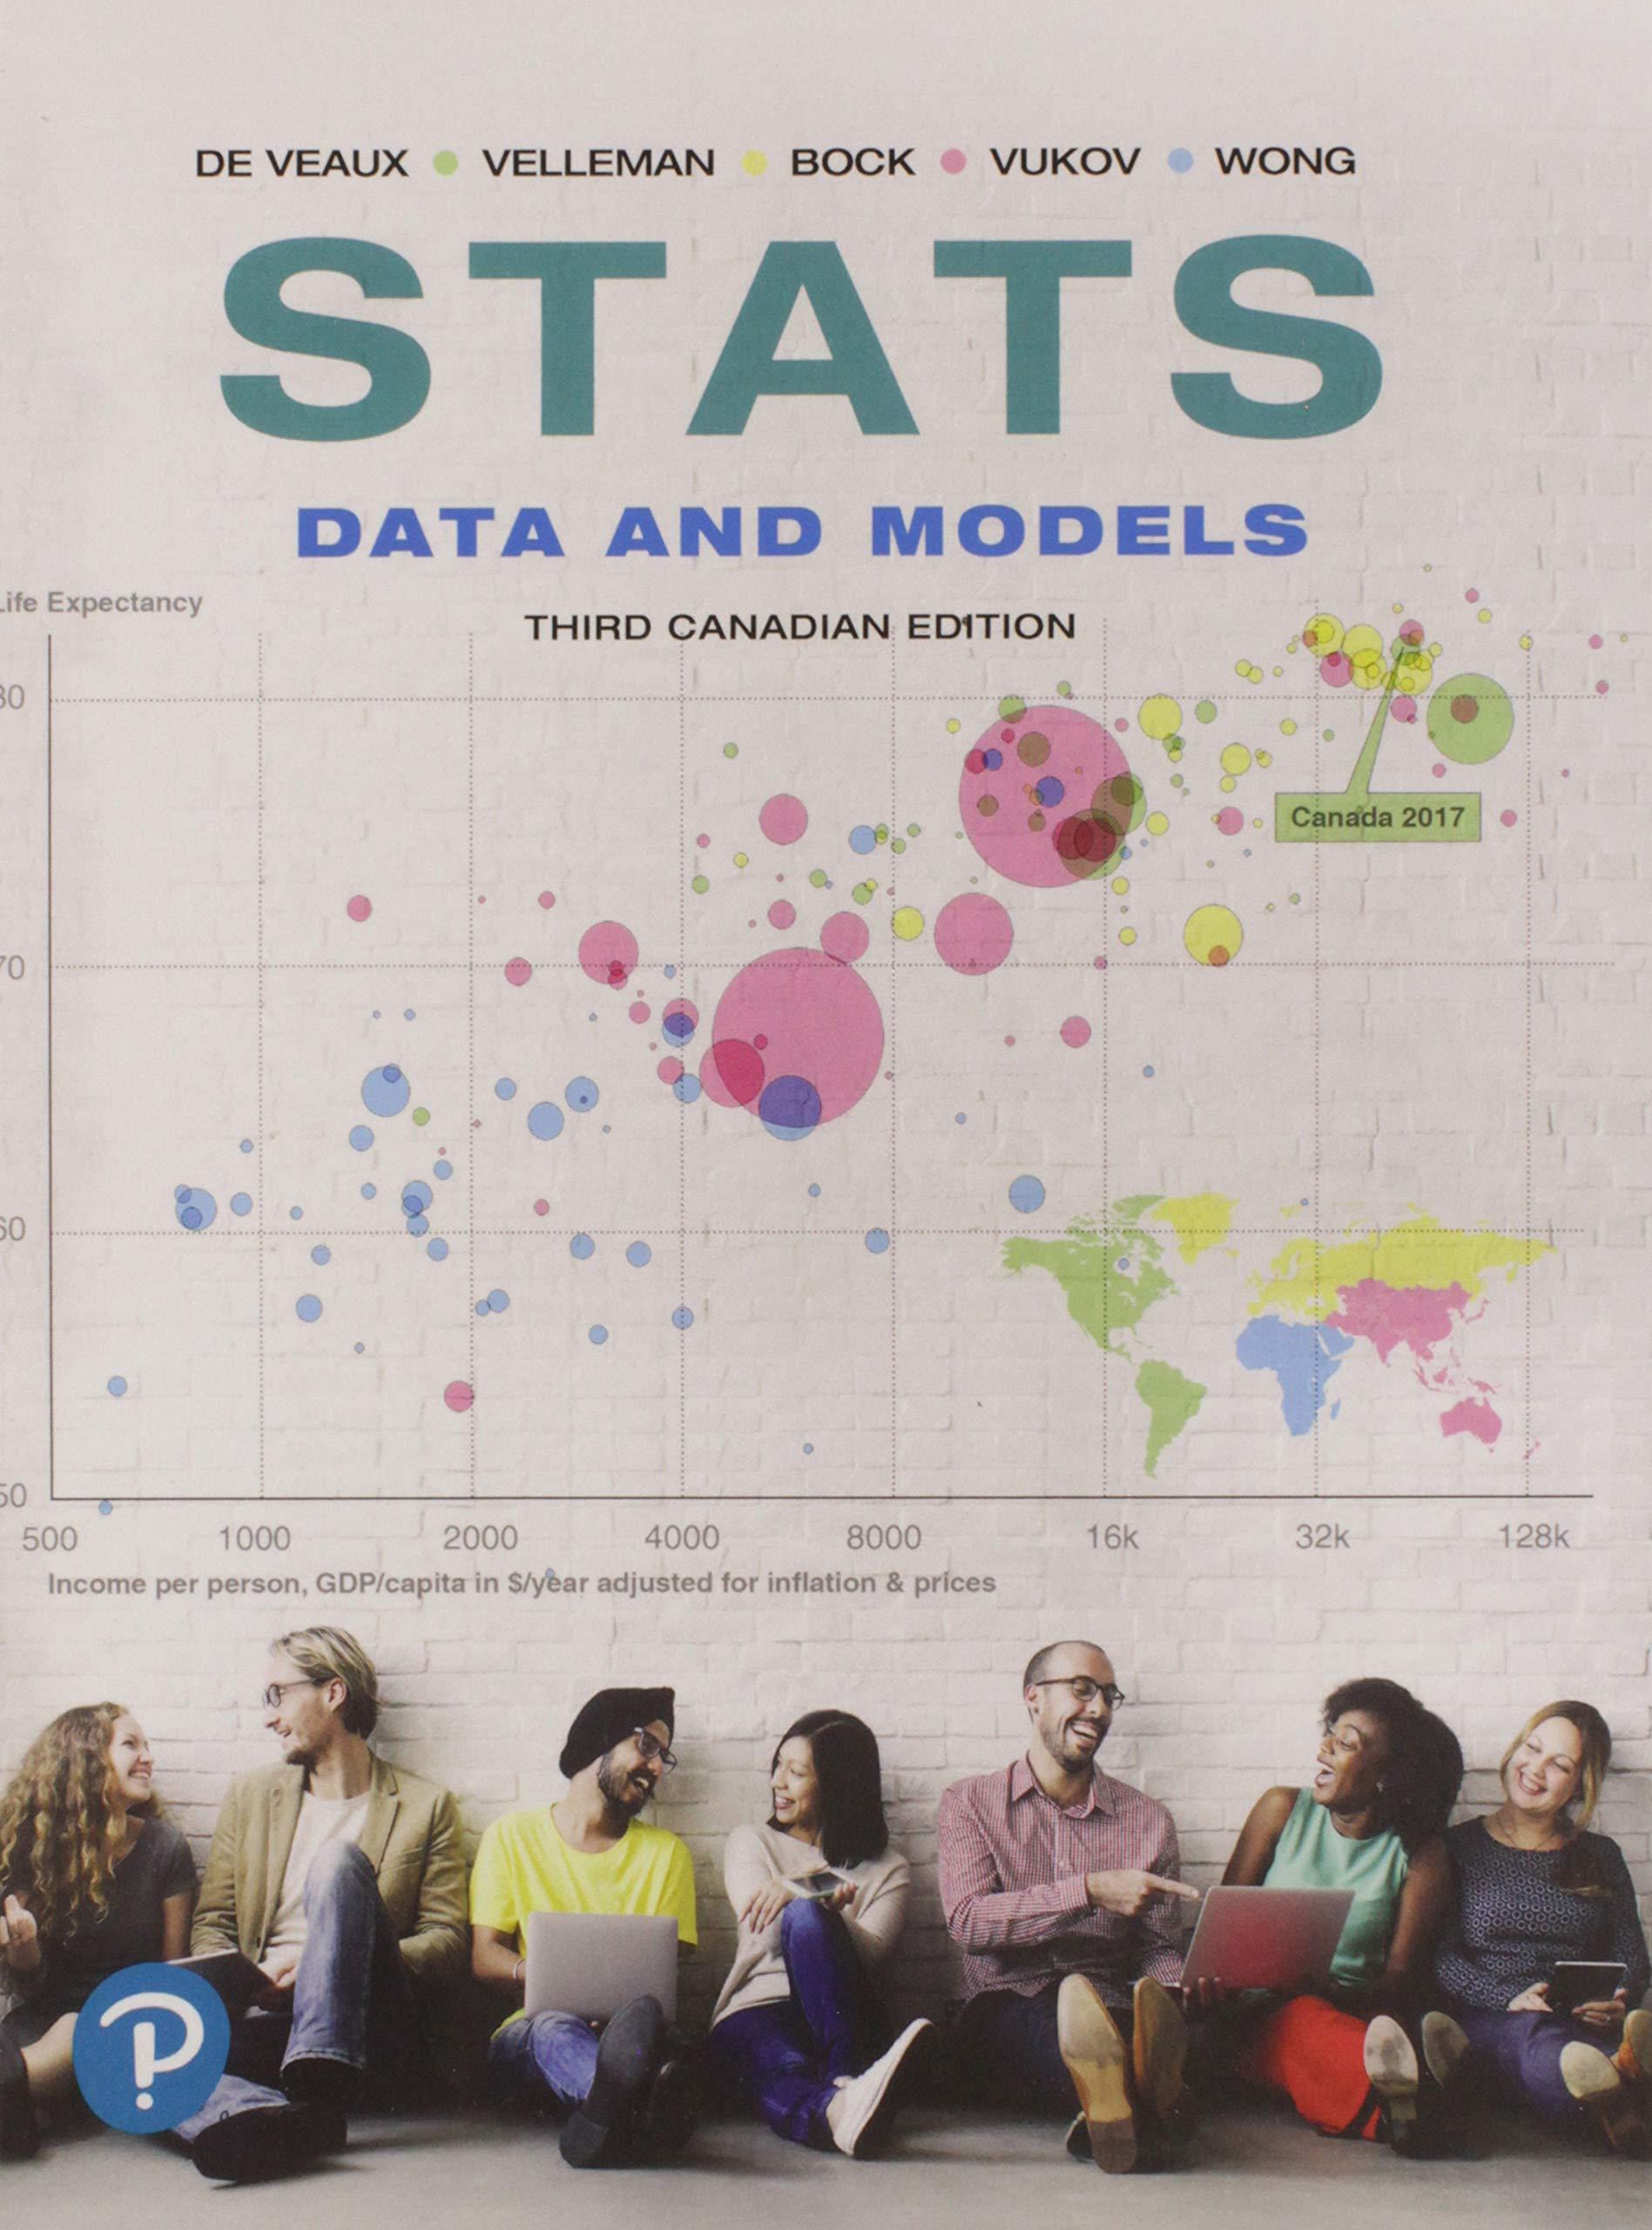 stats data and models 3rd canadian edition richard de veaux, paul velleman, david bock, augustin vukov,